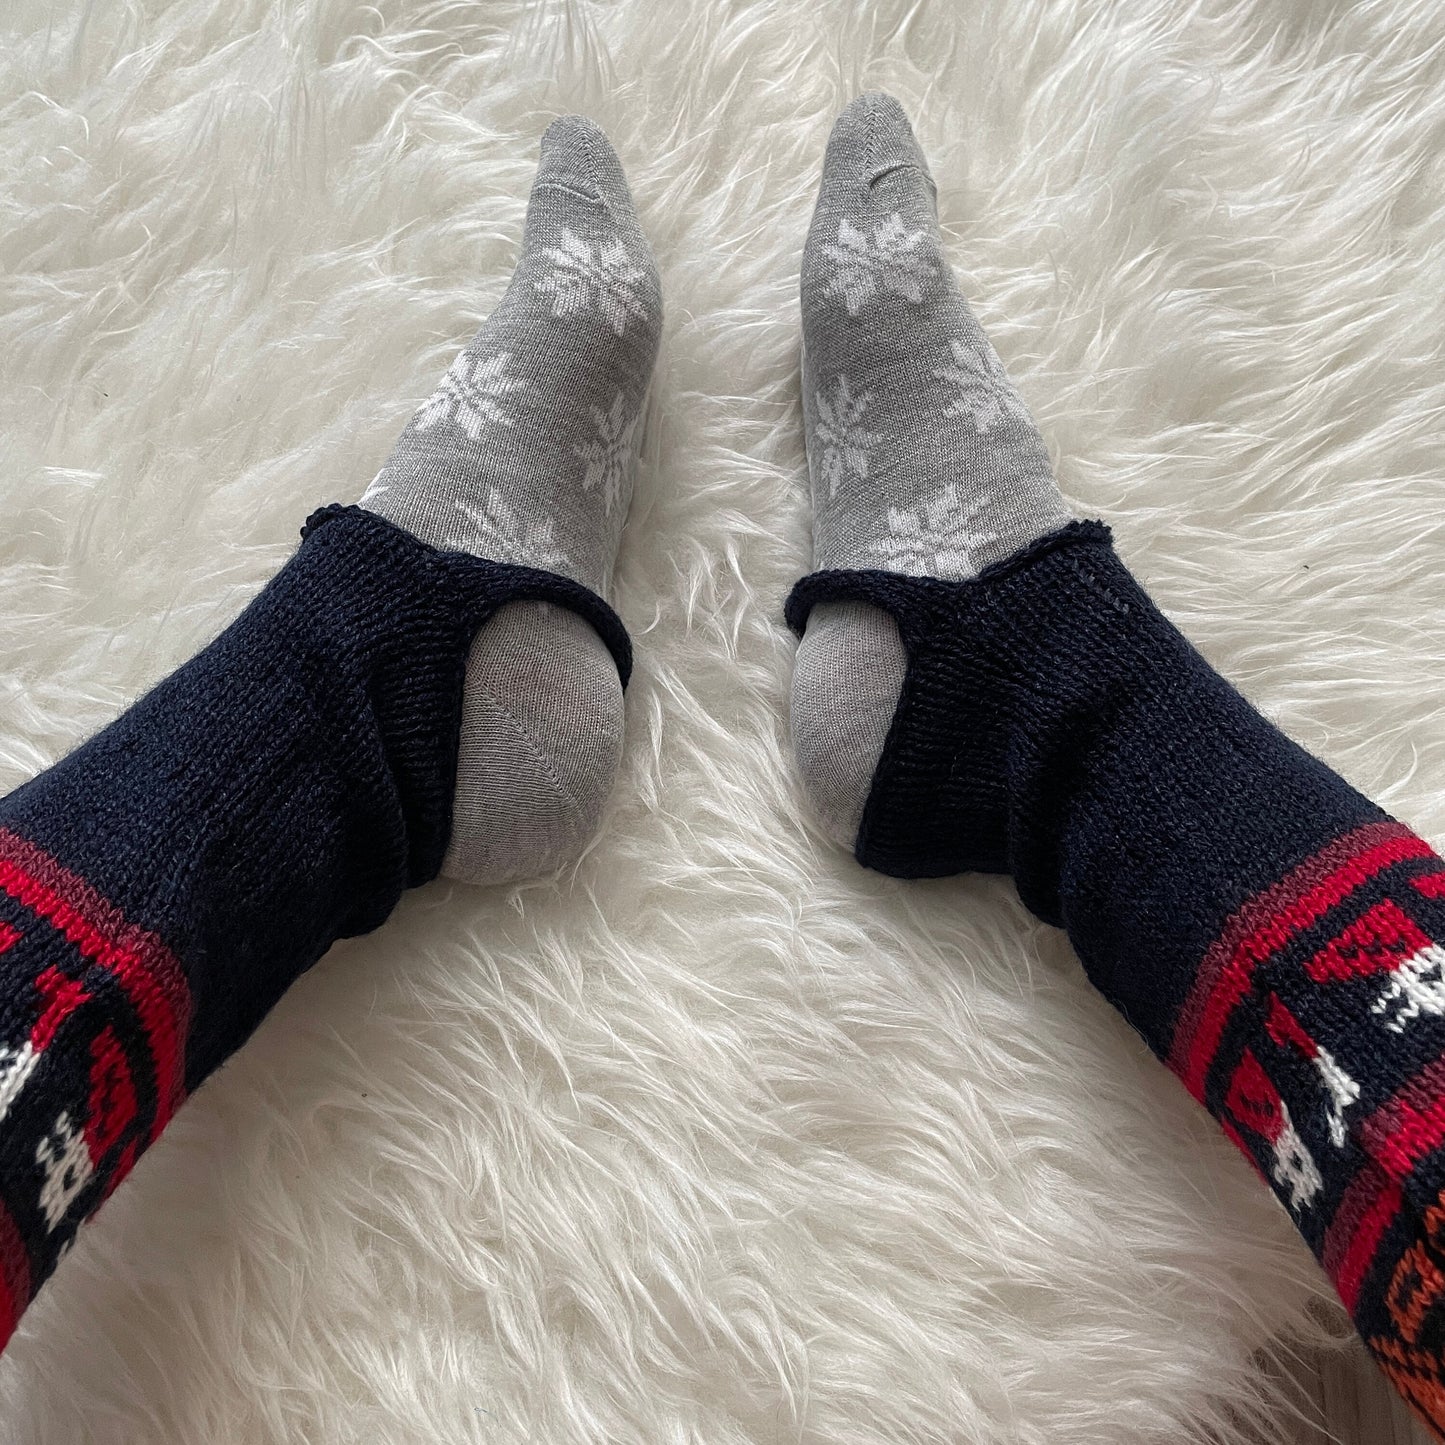 Warm Winter Footless Socks | Leg Warmers Size 6-8 US Adult Socks